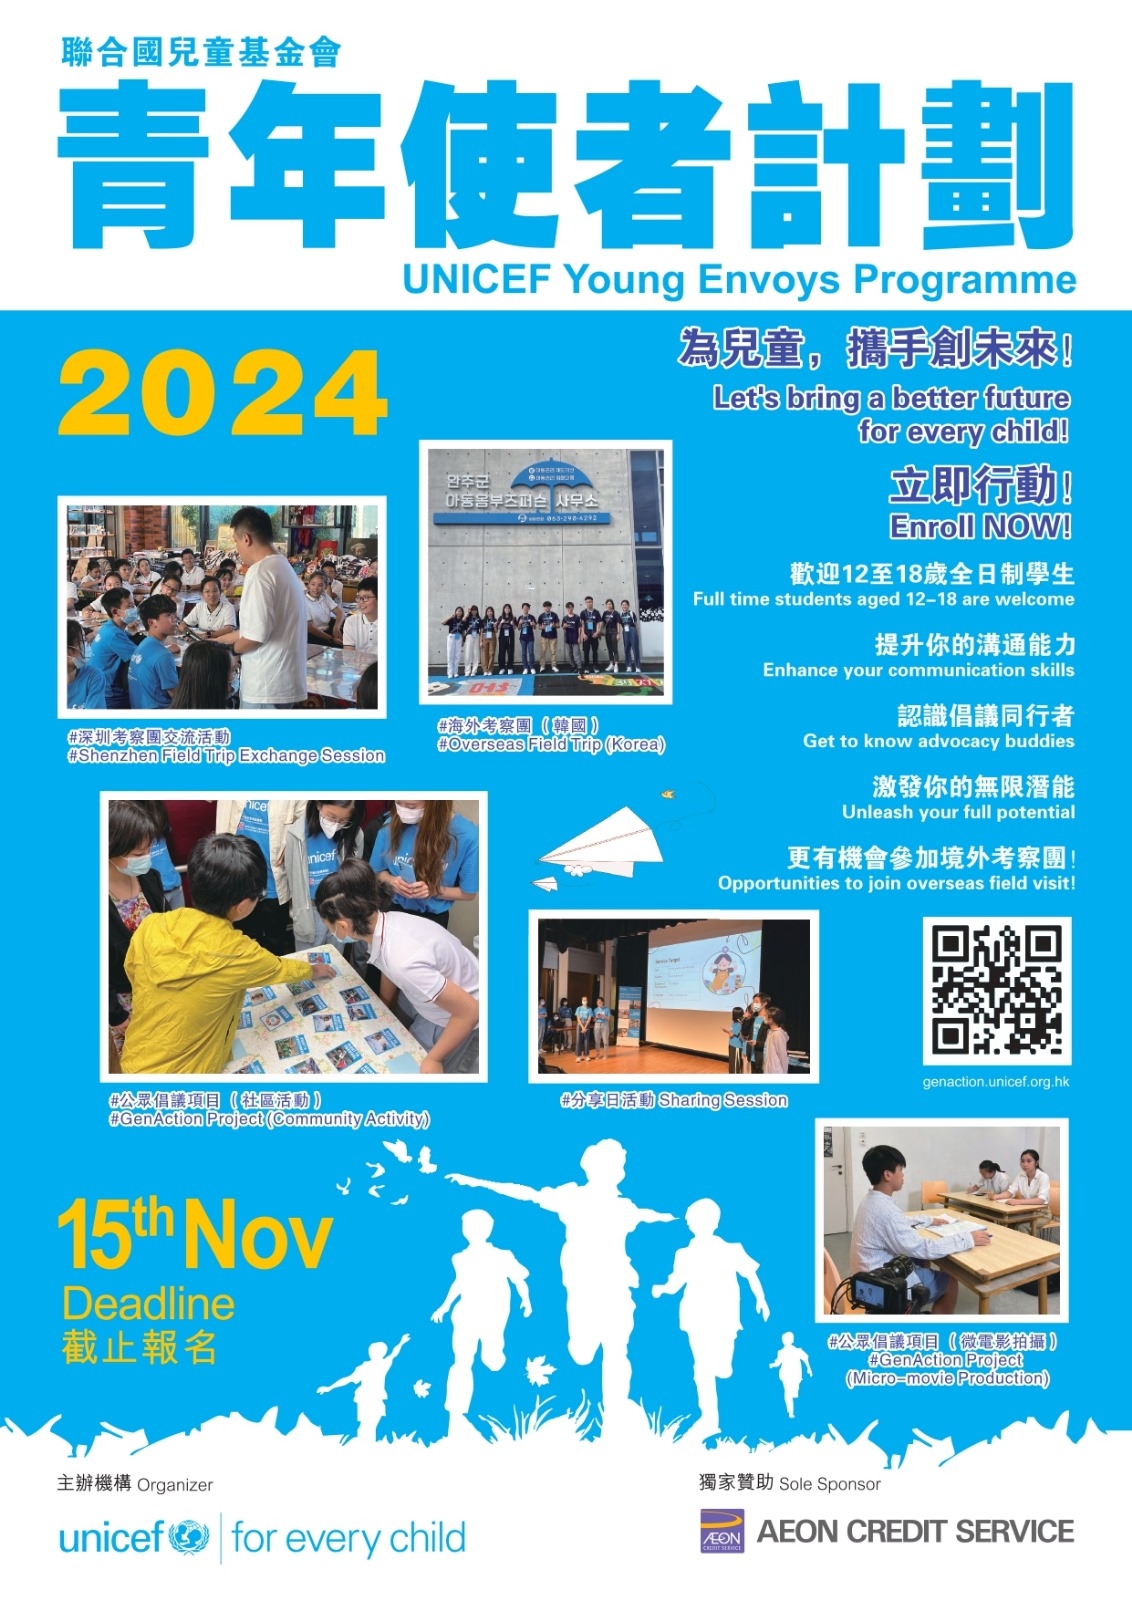 Self Photos / Files - UNICEF Young Envoys Programme 2024 Poster